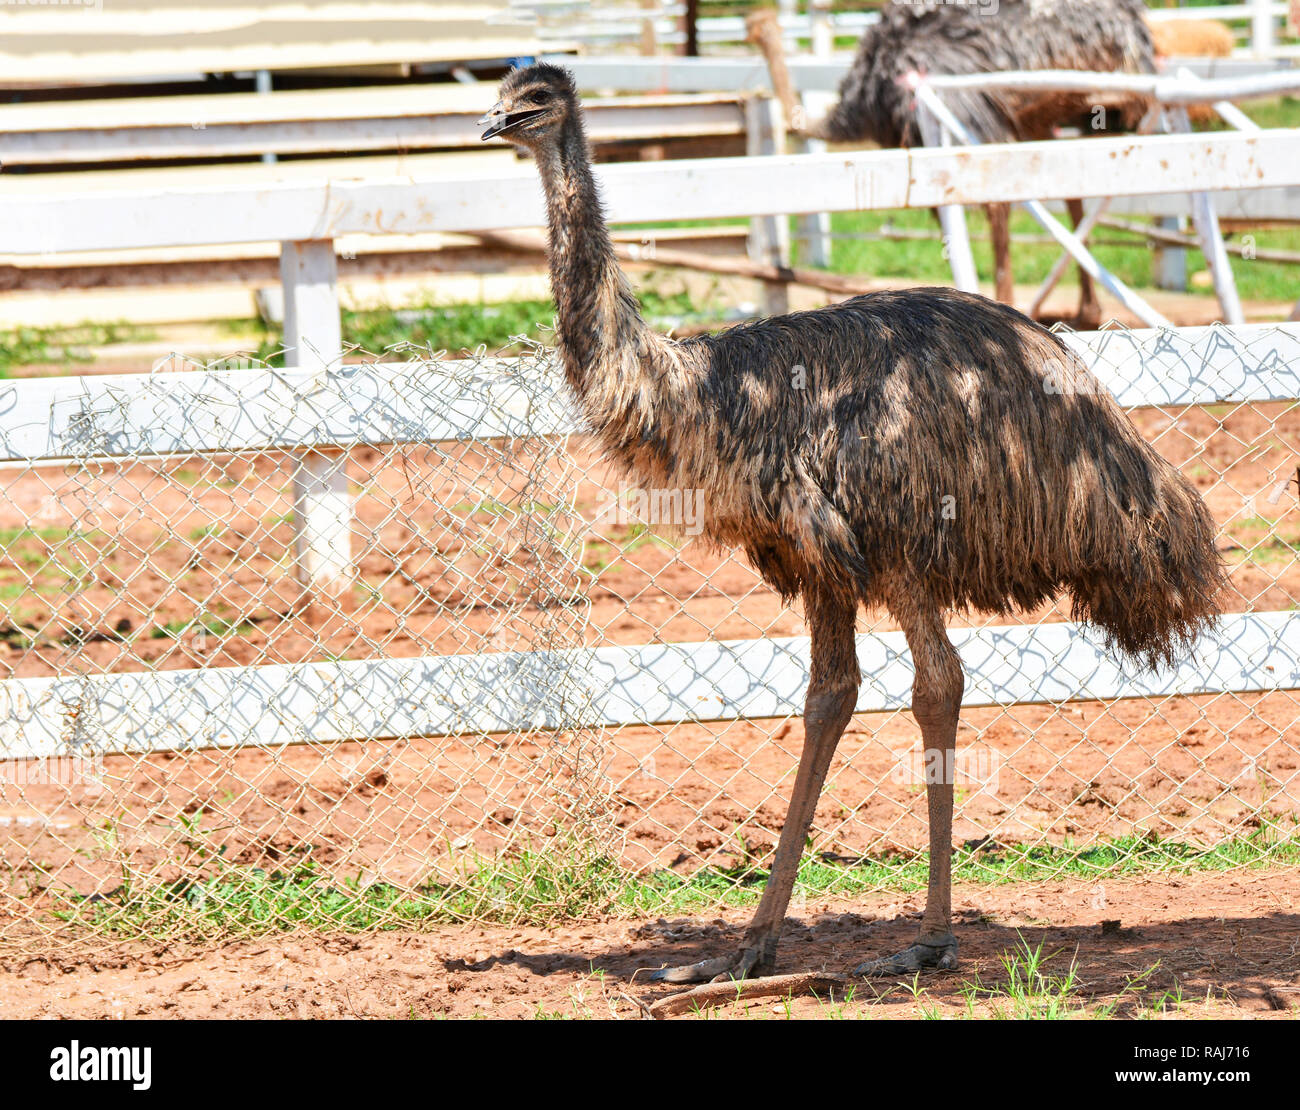 Emu walking eating in farm / Emu or ostrich large bird on cage zoo in the wildlife sanctuary - Common wild emu bird (Dromaius novaehollandiae) Stock Photo